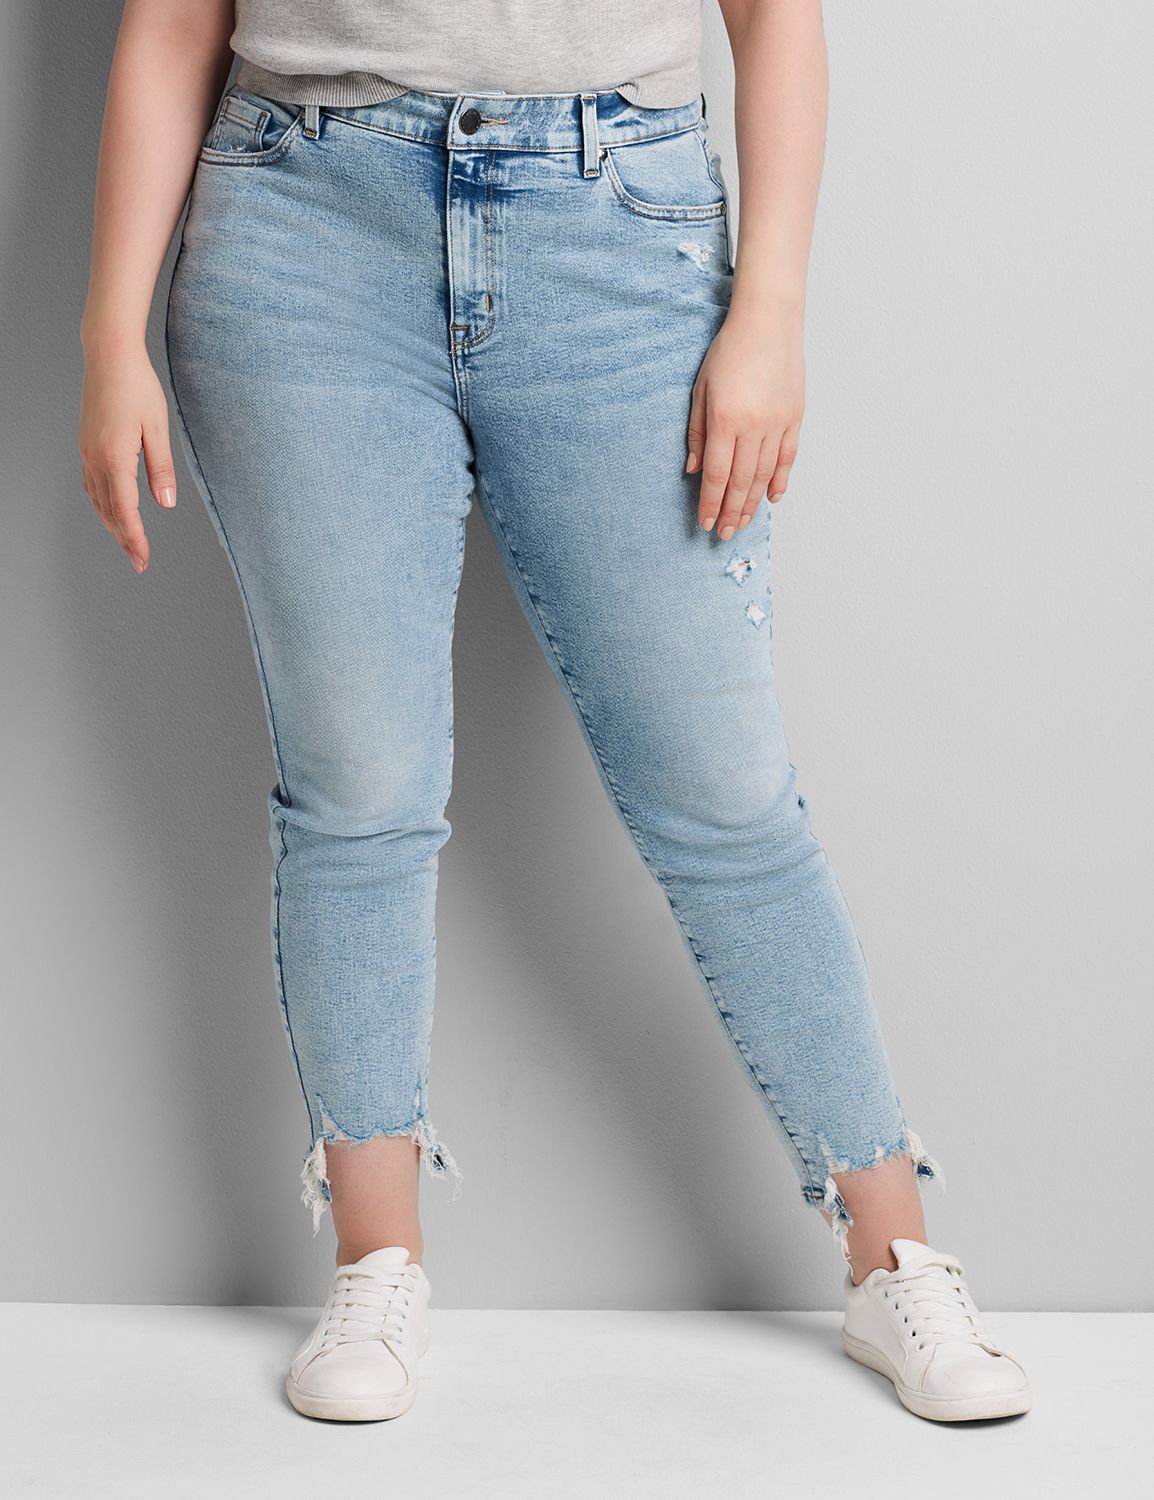 lane bryant high rise skinny jeans